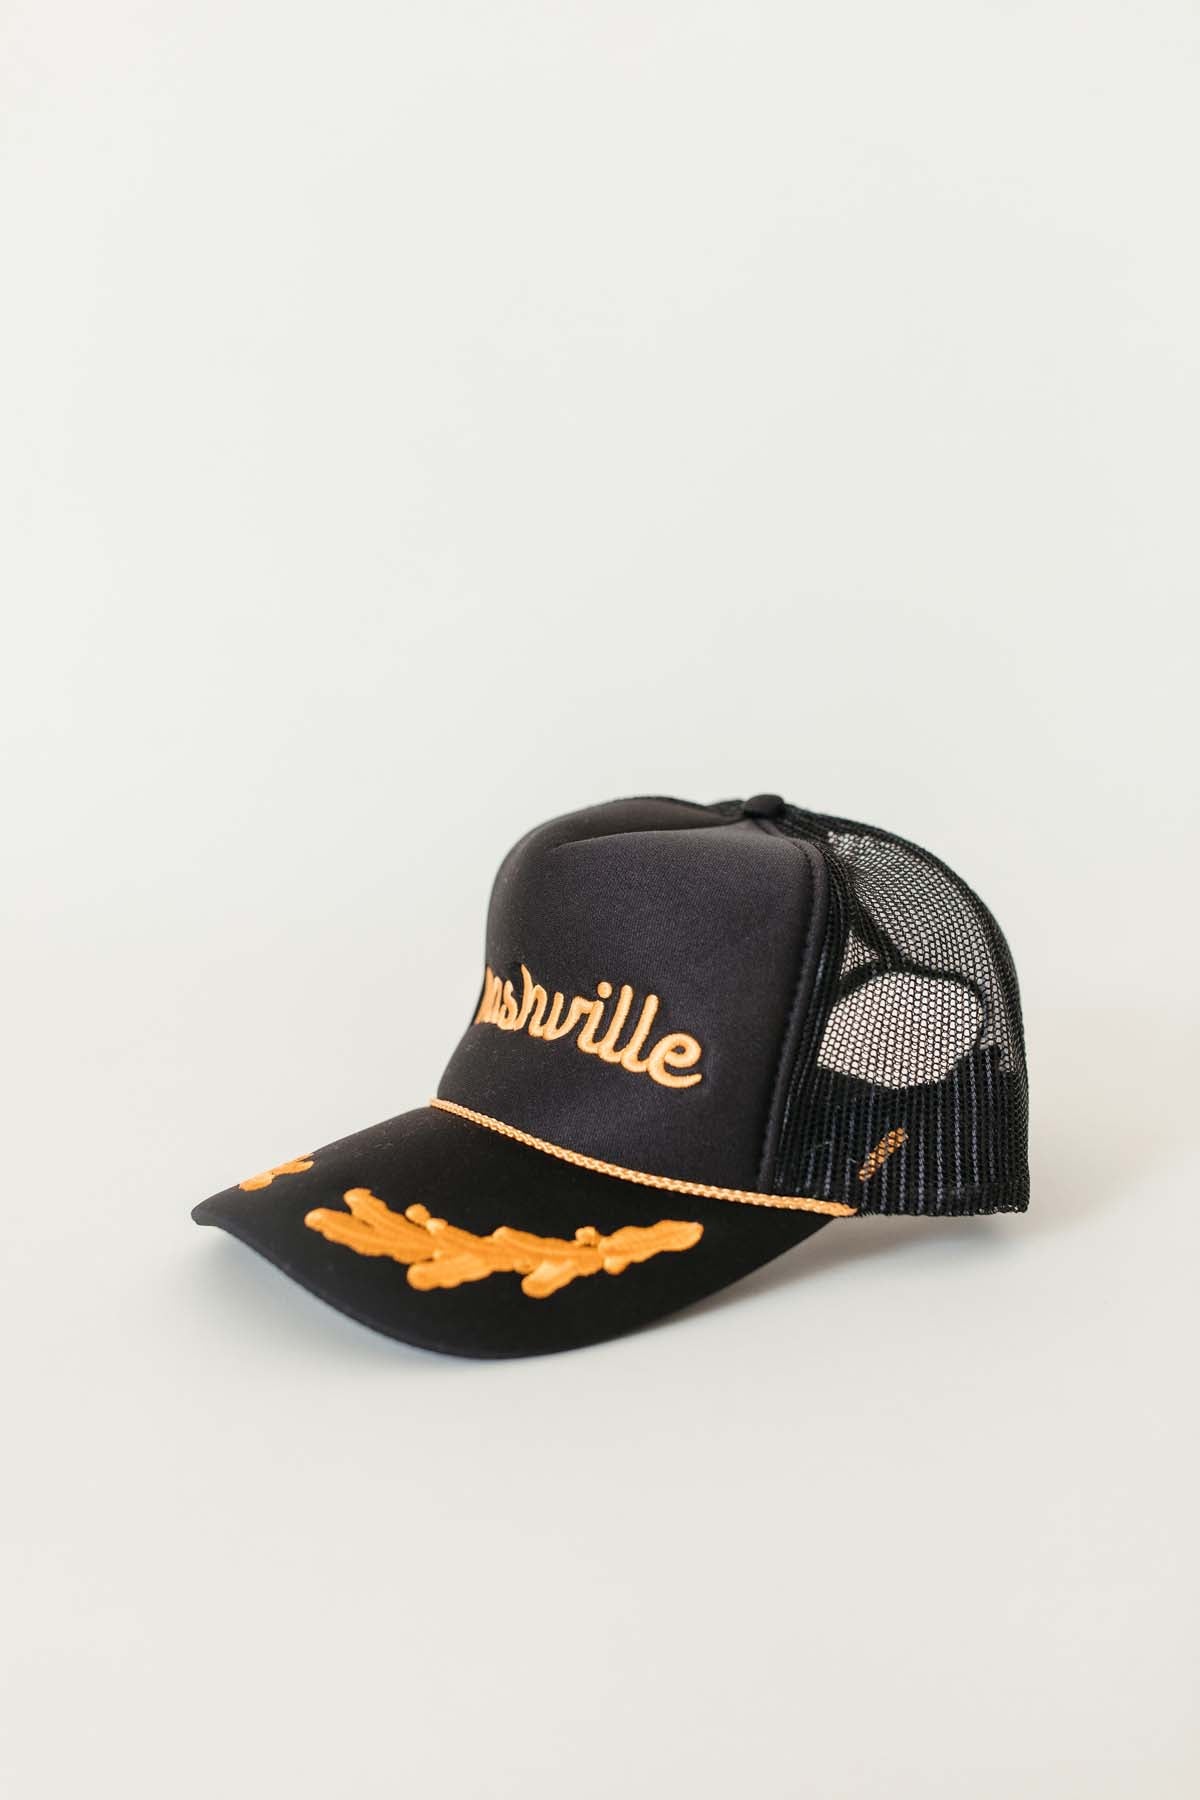 Nashville Trucker Hat, alternate, color, black